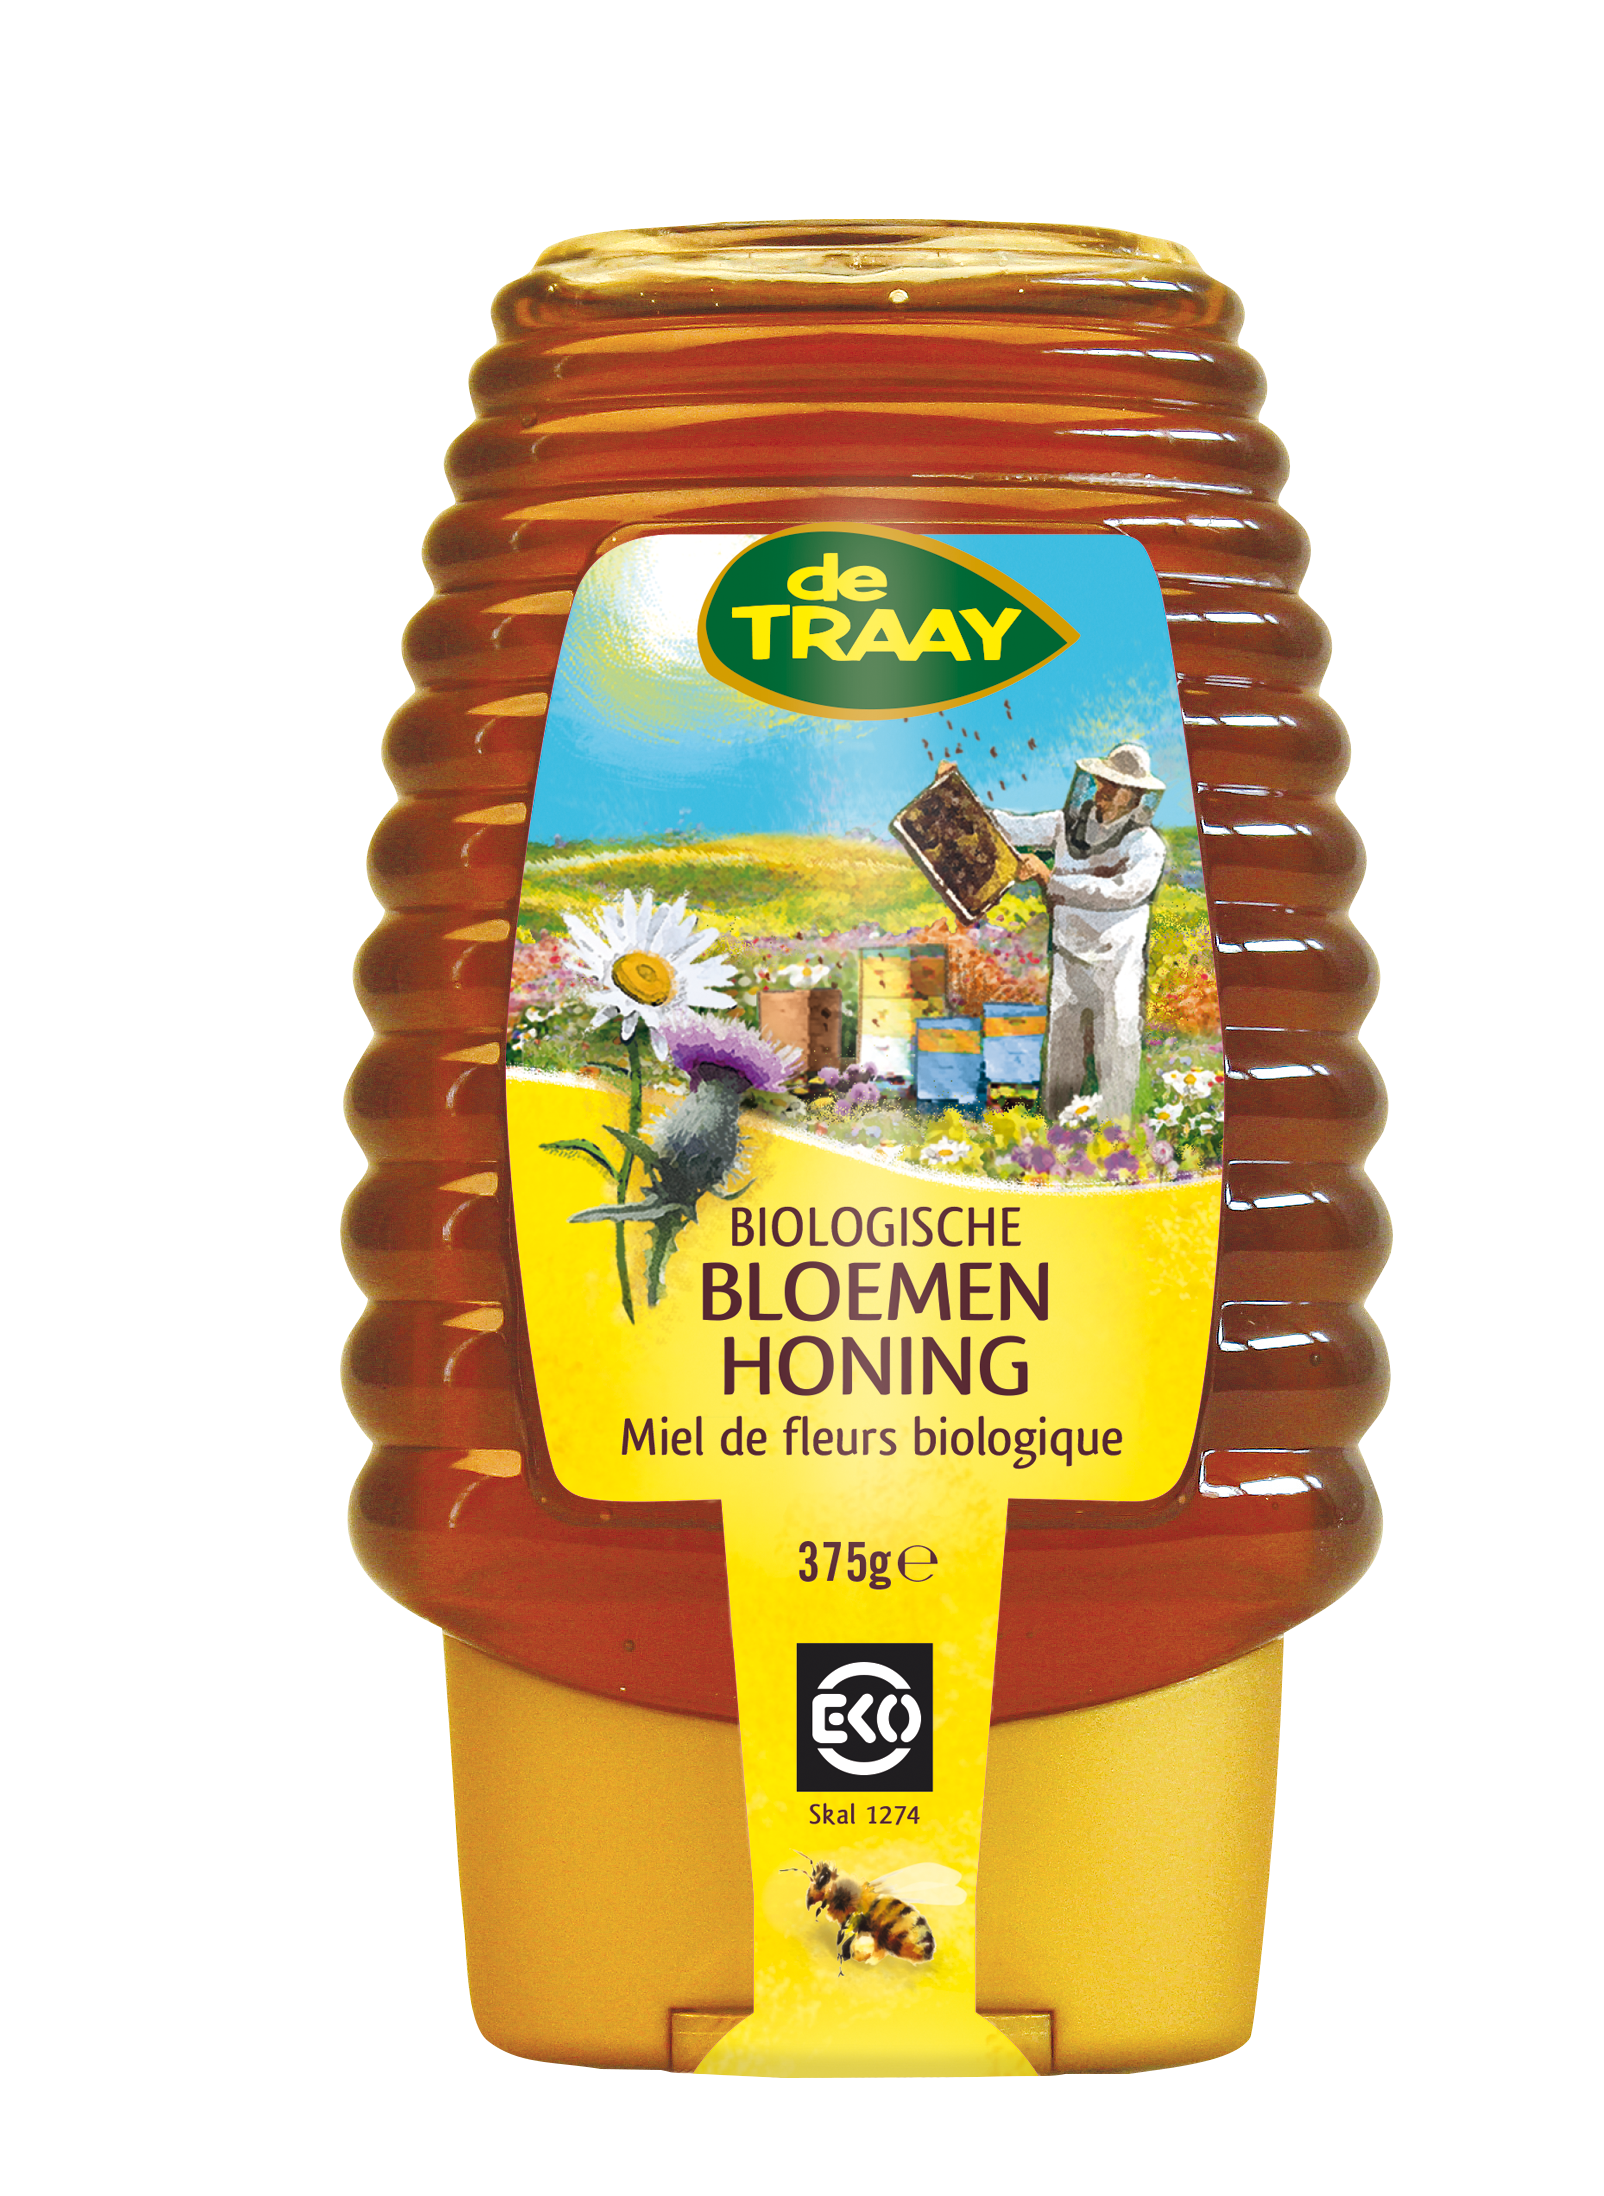 Organic blossom honey